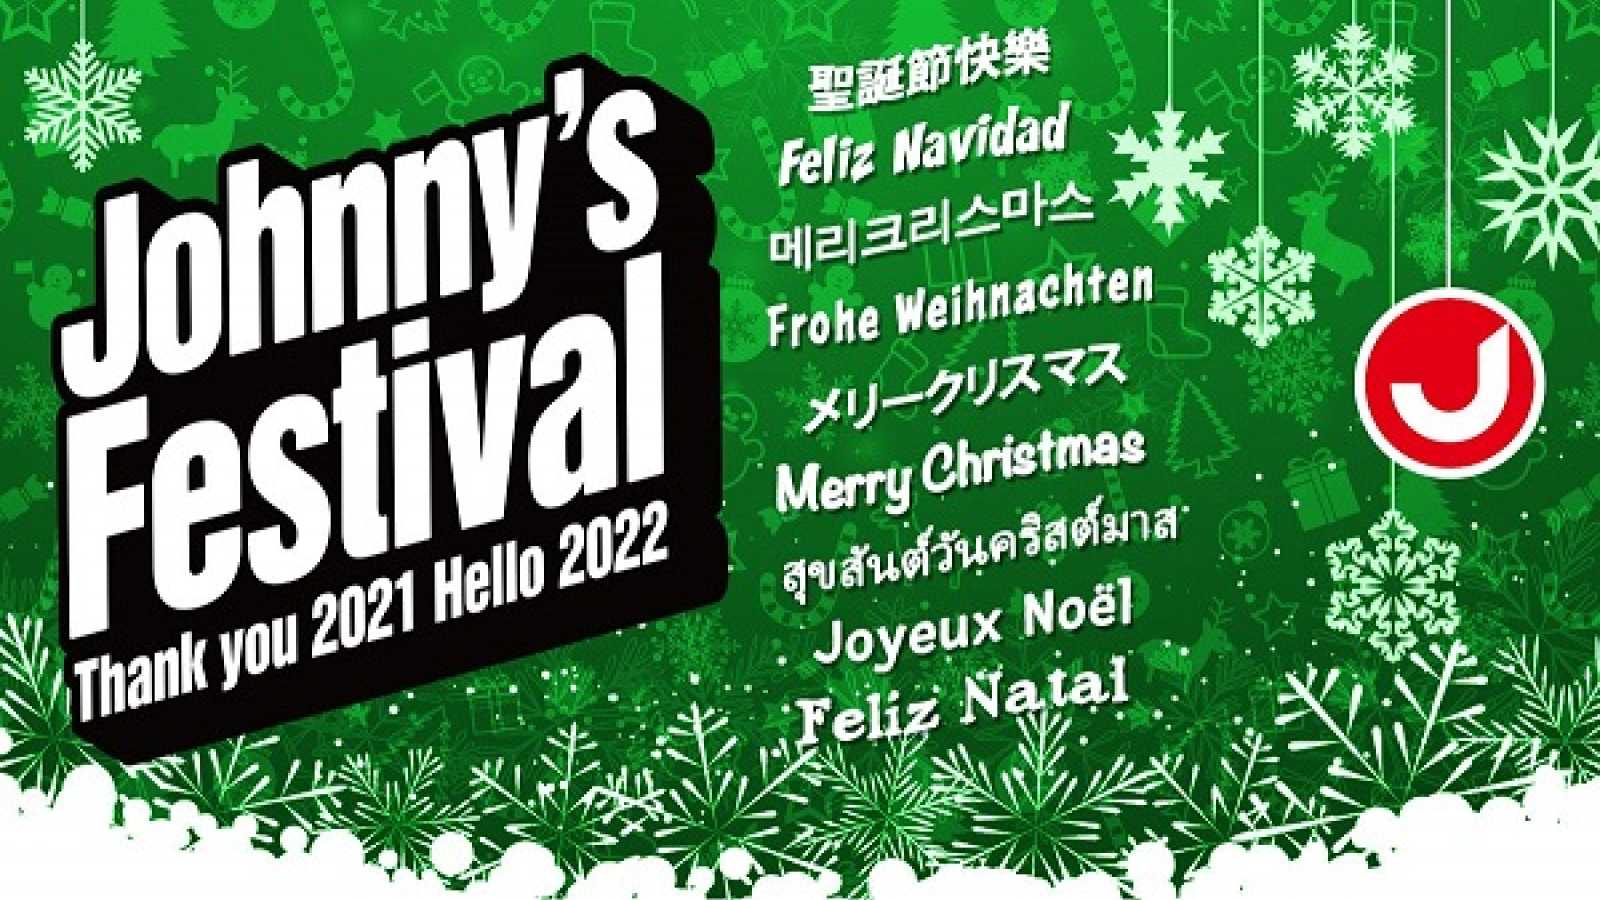 "Johnny’s Festival ‾ Thank you 2021 Hello 2022" będzie dostępny do oglądania na żądanie © Johnny & Associates. All rights reserved.